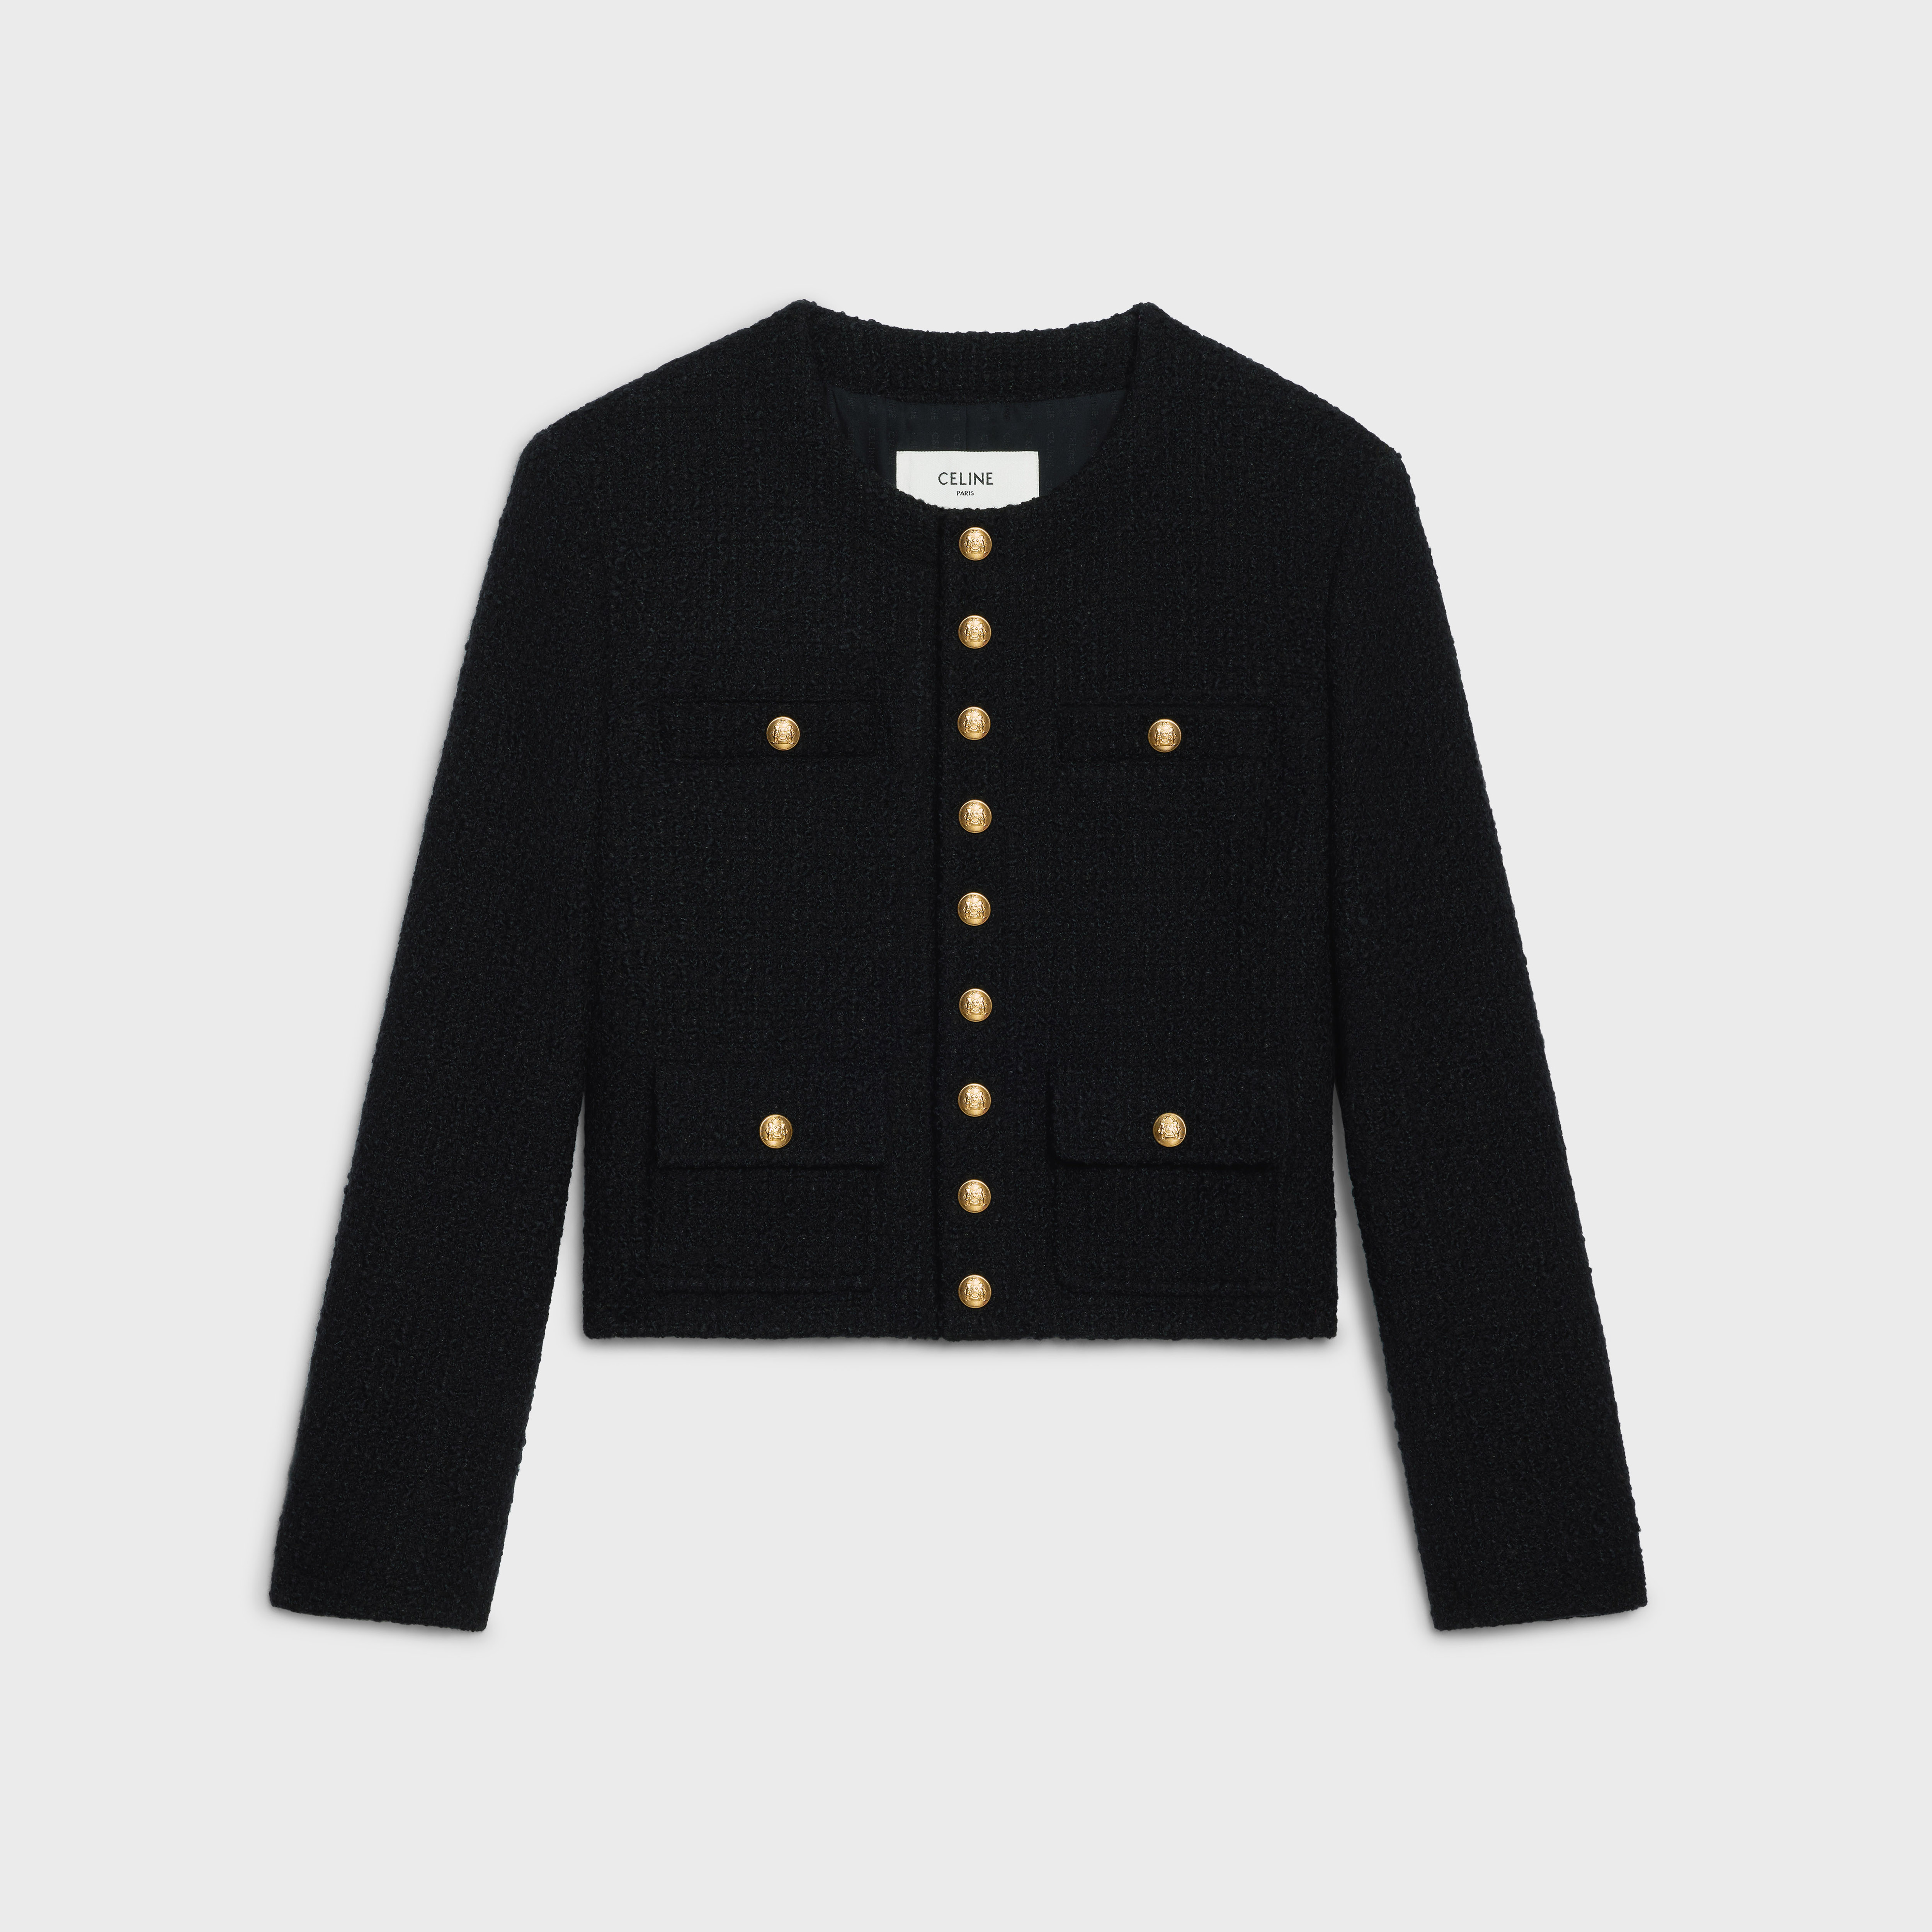 Celine Tweed Jacket